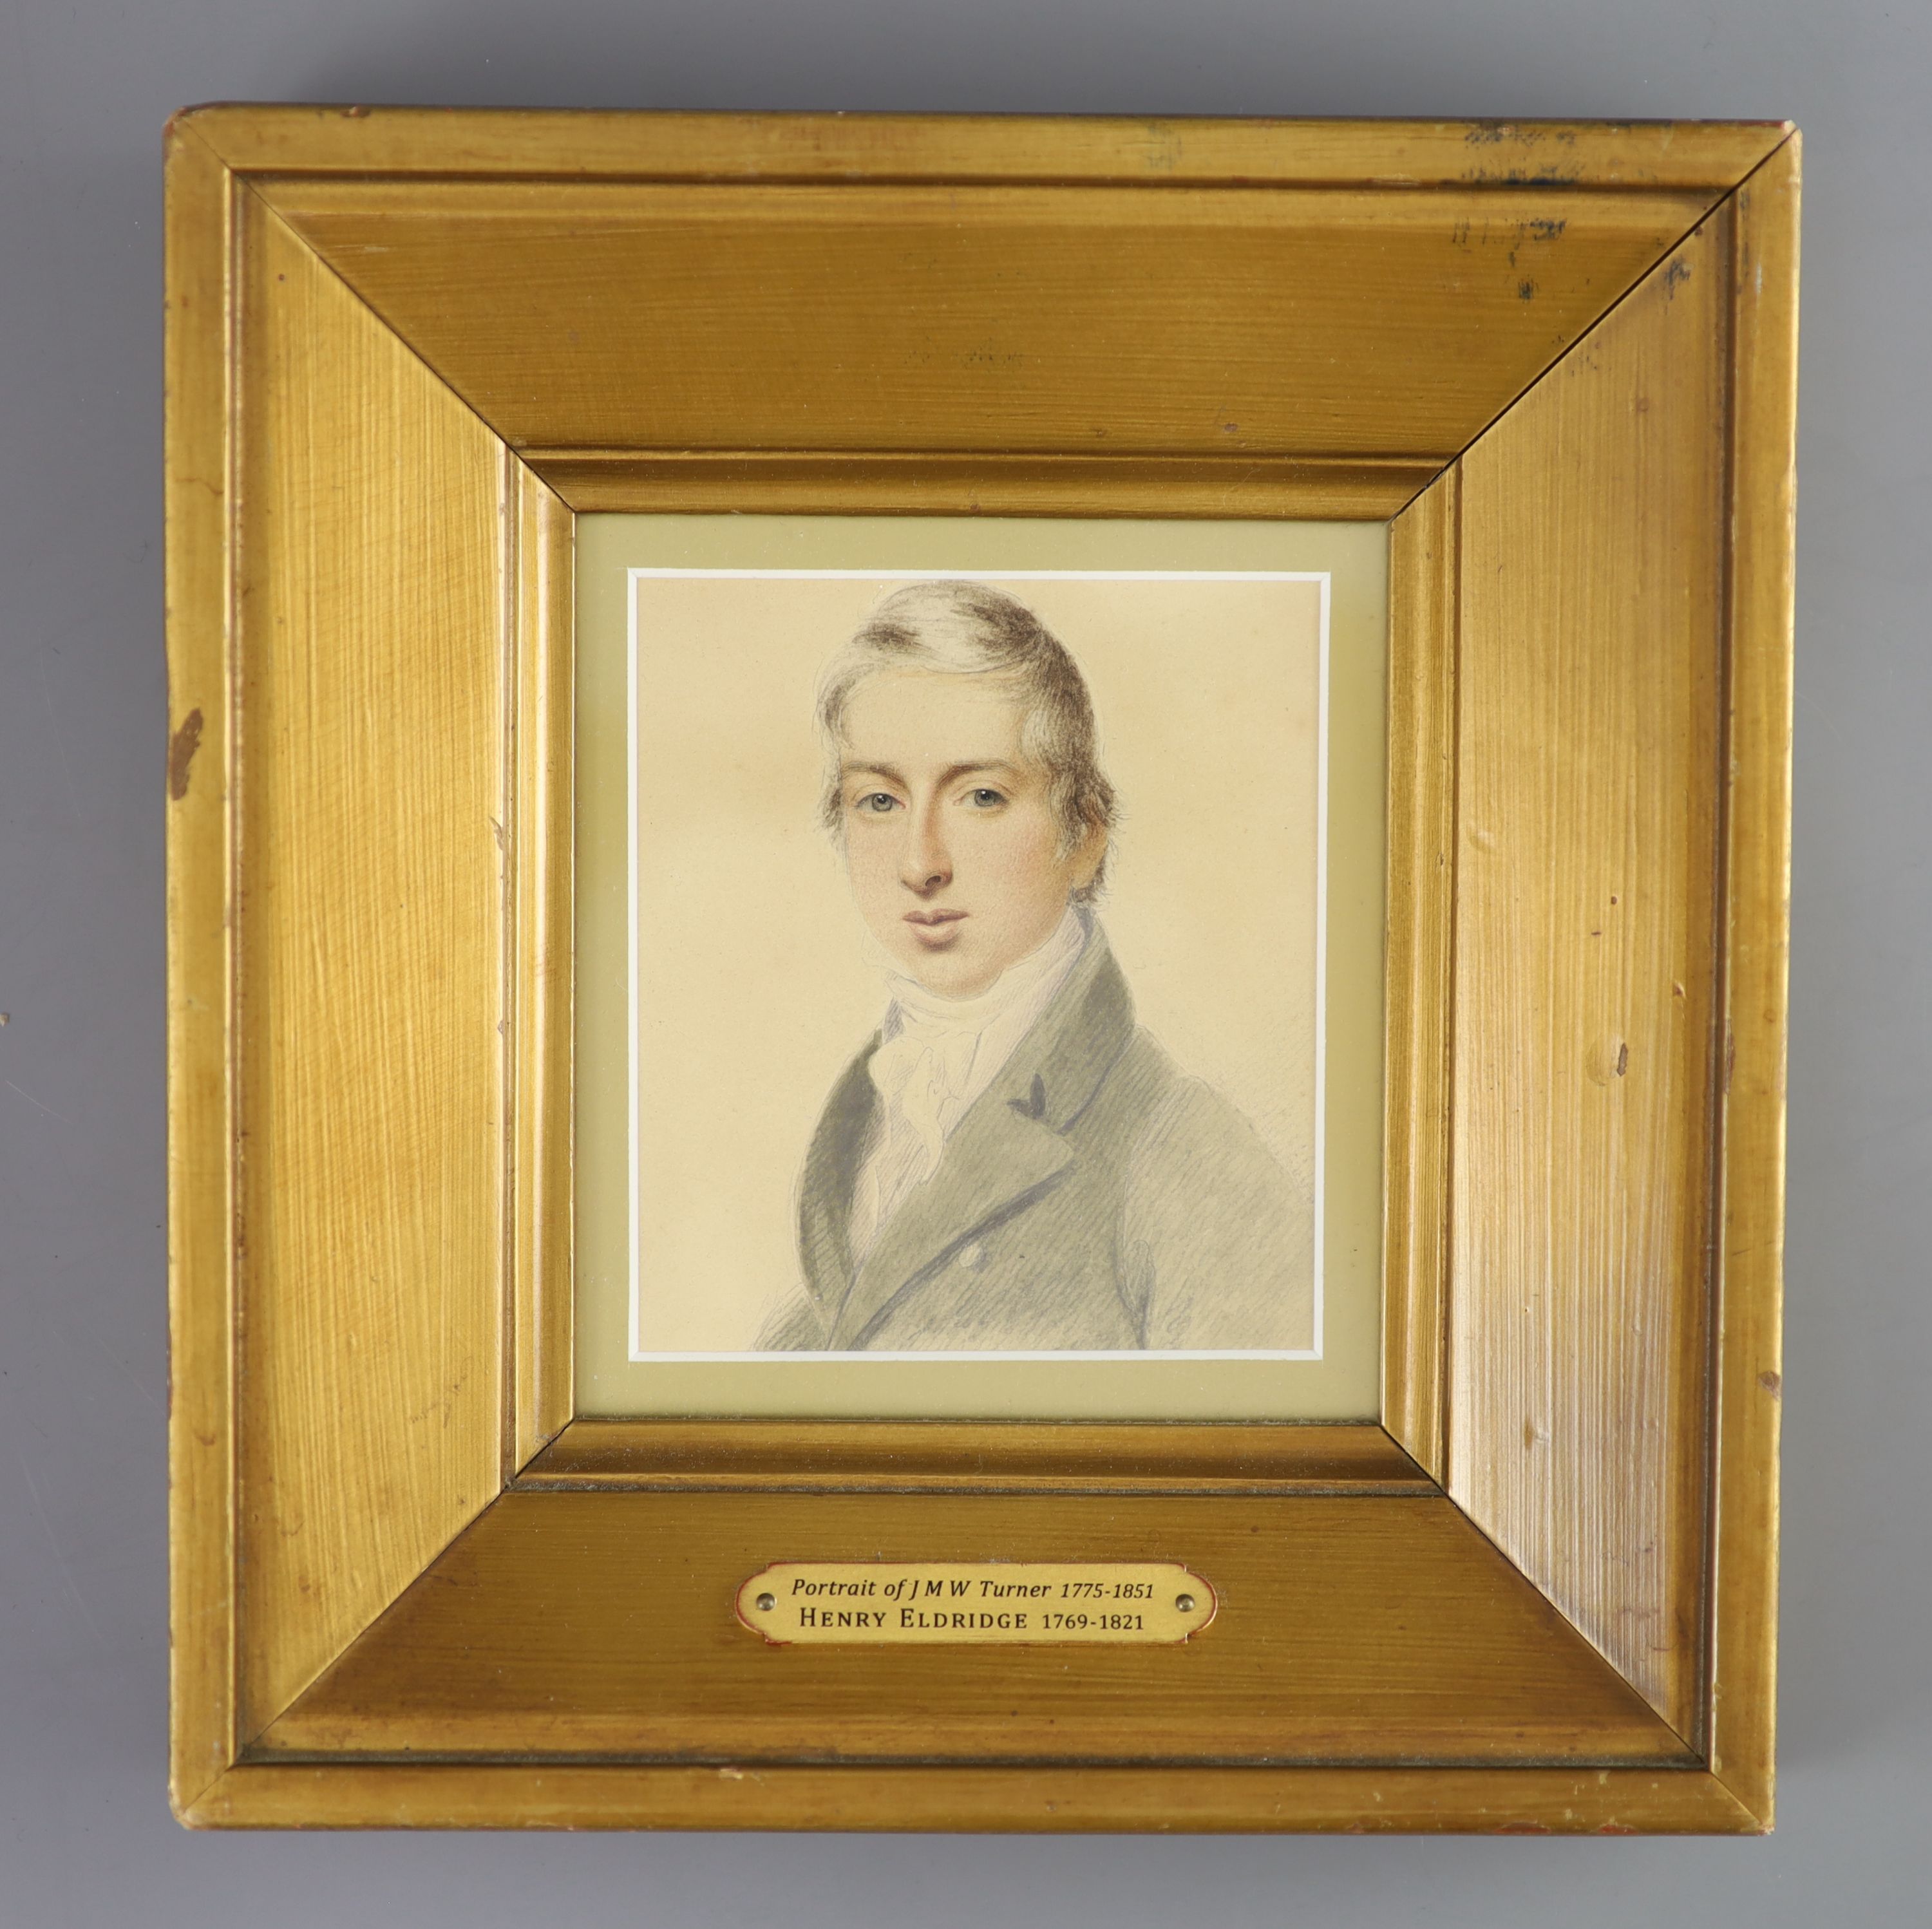 Attributed to Henry Eldridge (1769-1821), Portrait of J.M.W. Turner (1775-1851), watercolour over graphite, 10.5 x 9.5cm